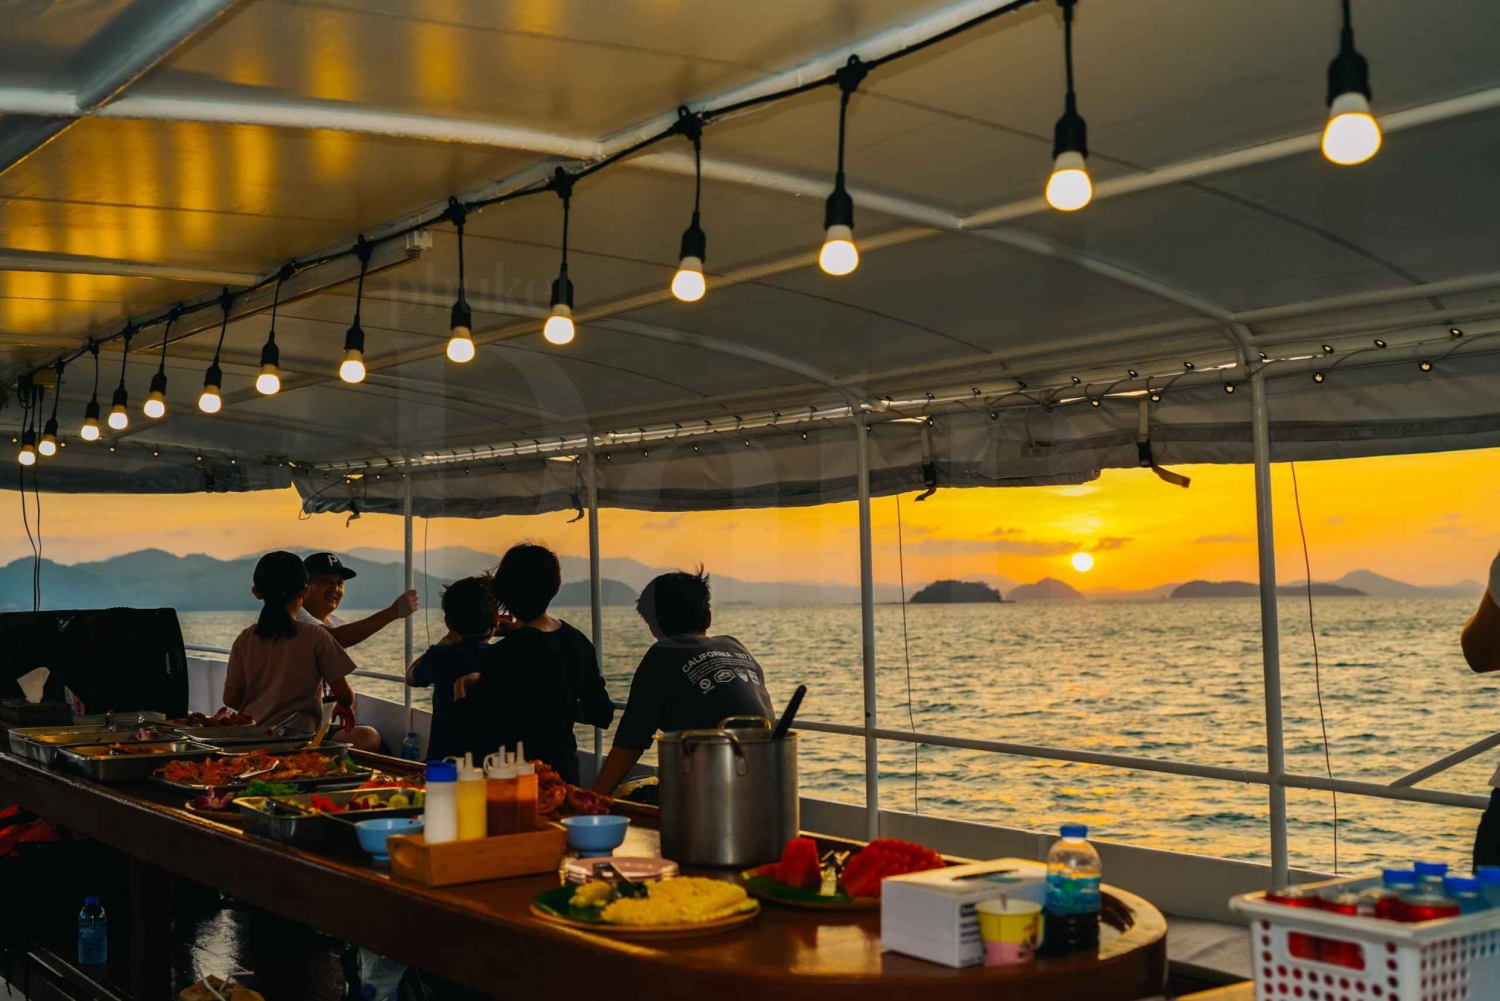 Phuket: Crociera con cena a base di pesce al tramonto nella baia di Phang Nga